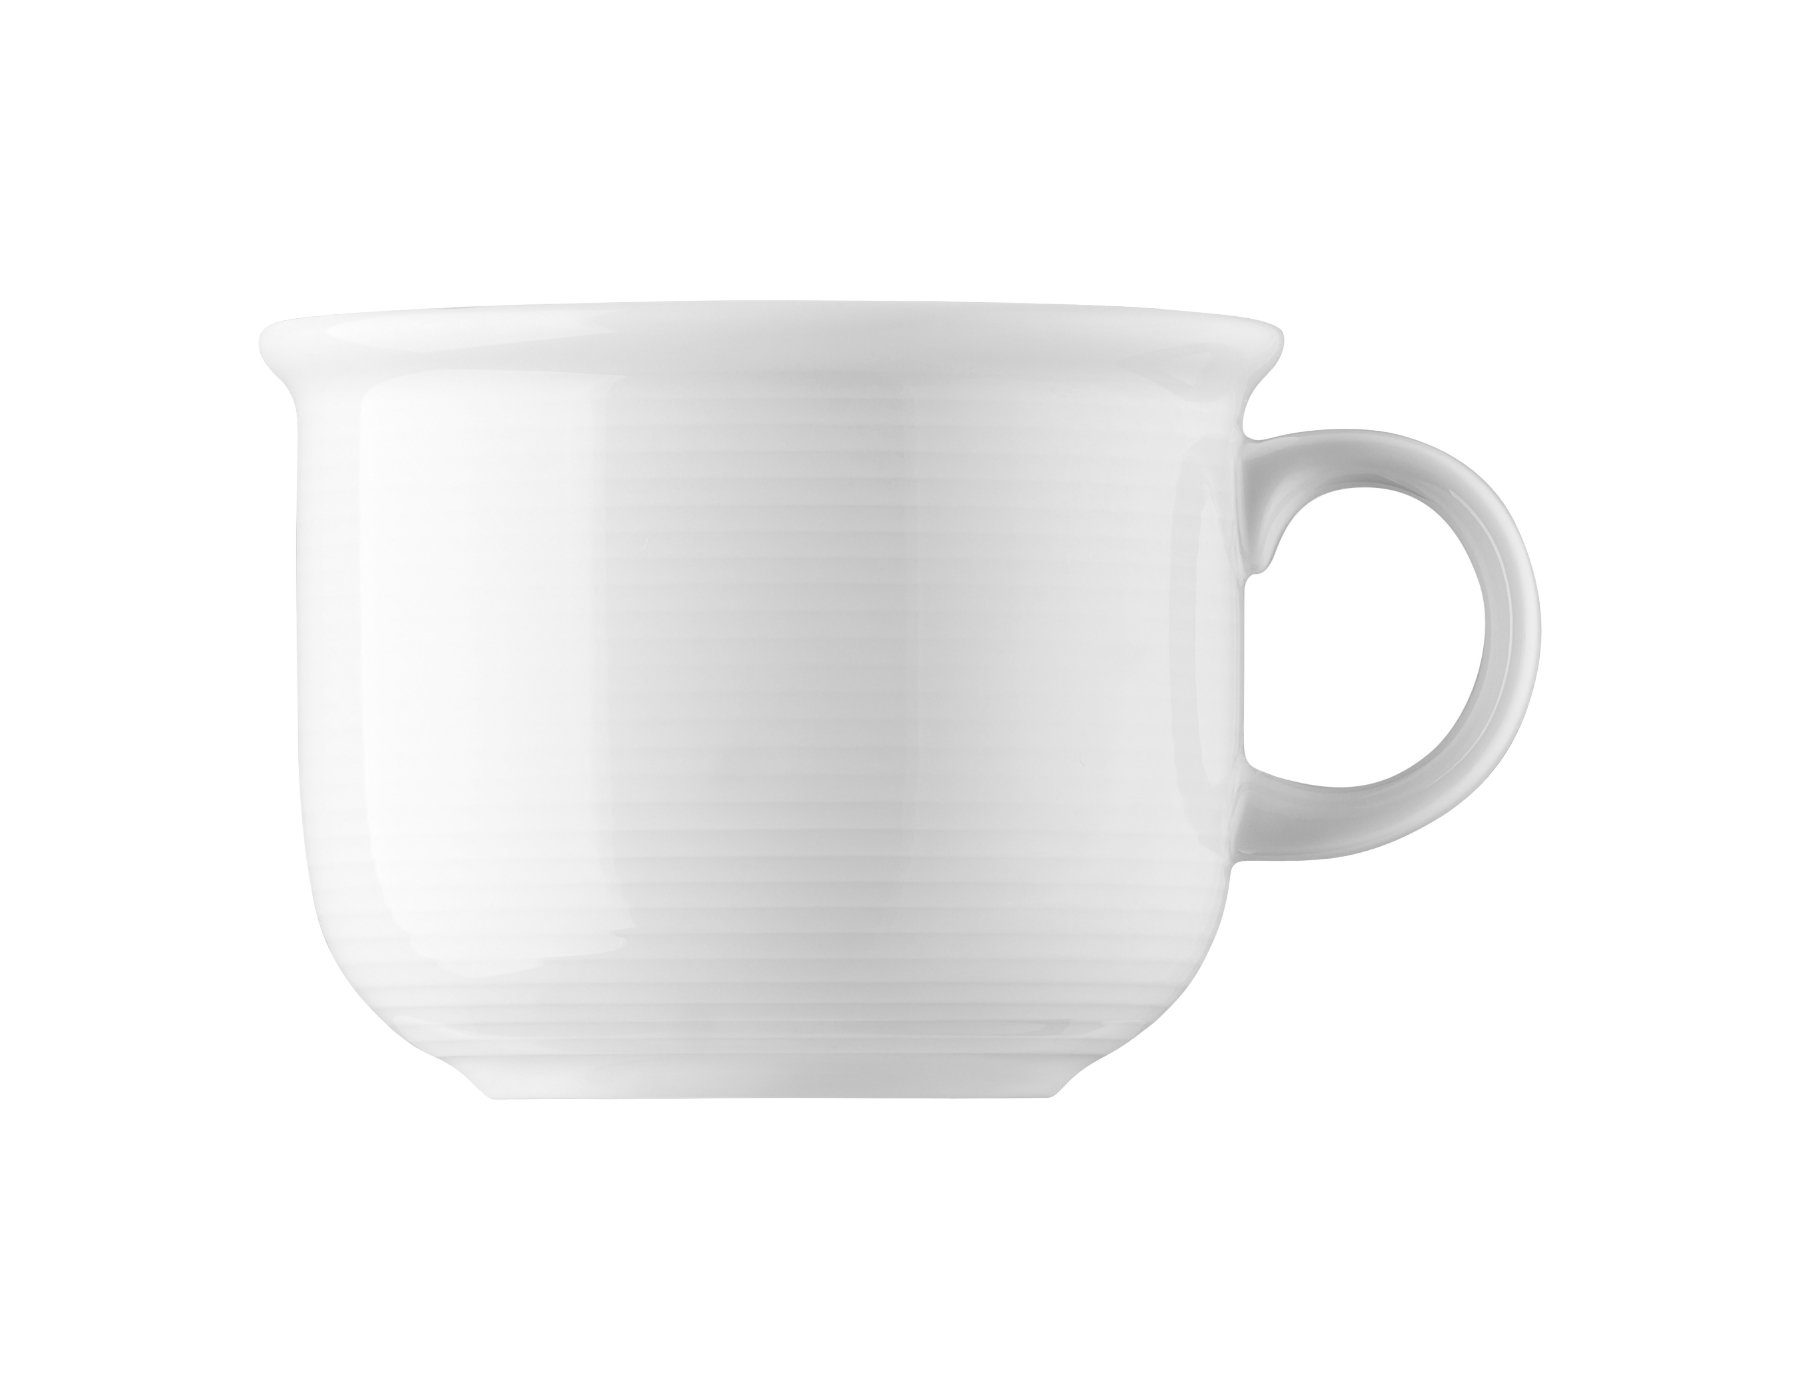 Stück, Porzellan, TREND Weiß mikrowellengeeignet - Porzellan - Tasse 6 Thomas spülmaschinenfest und Porzellan, Kaffee-Obertasse